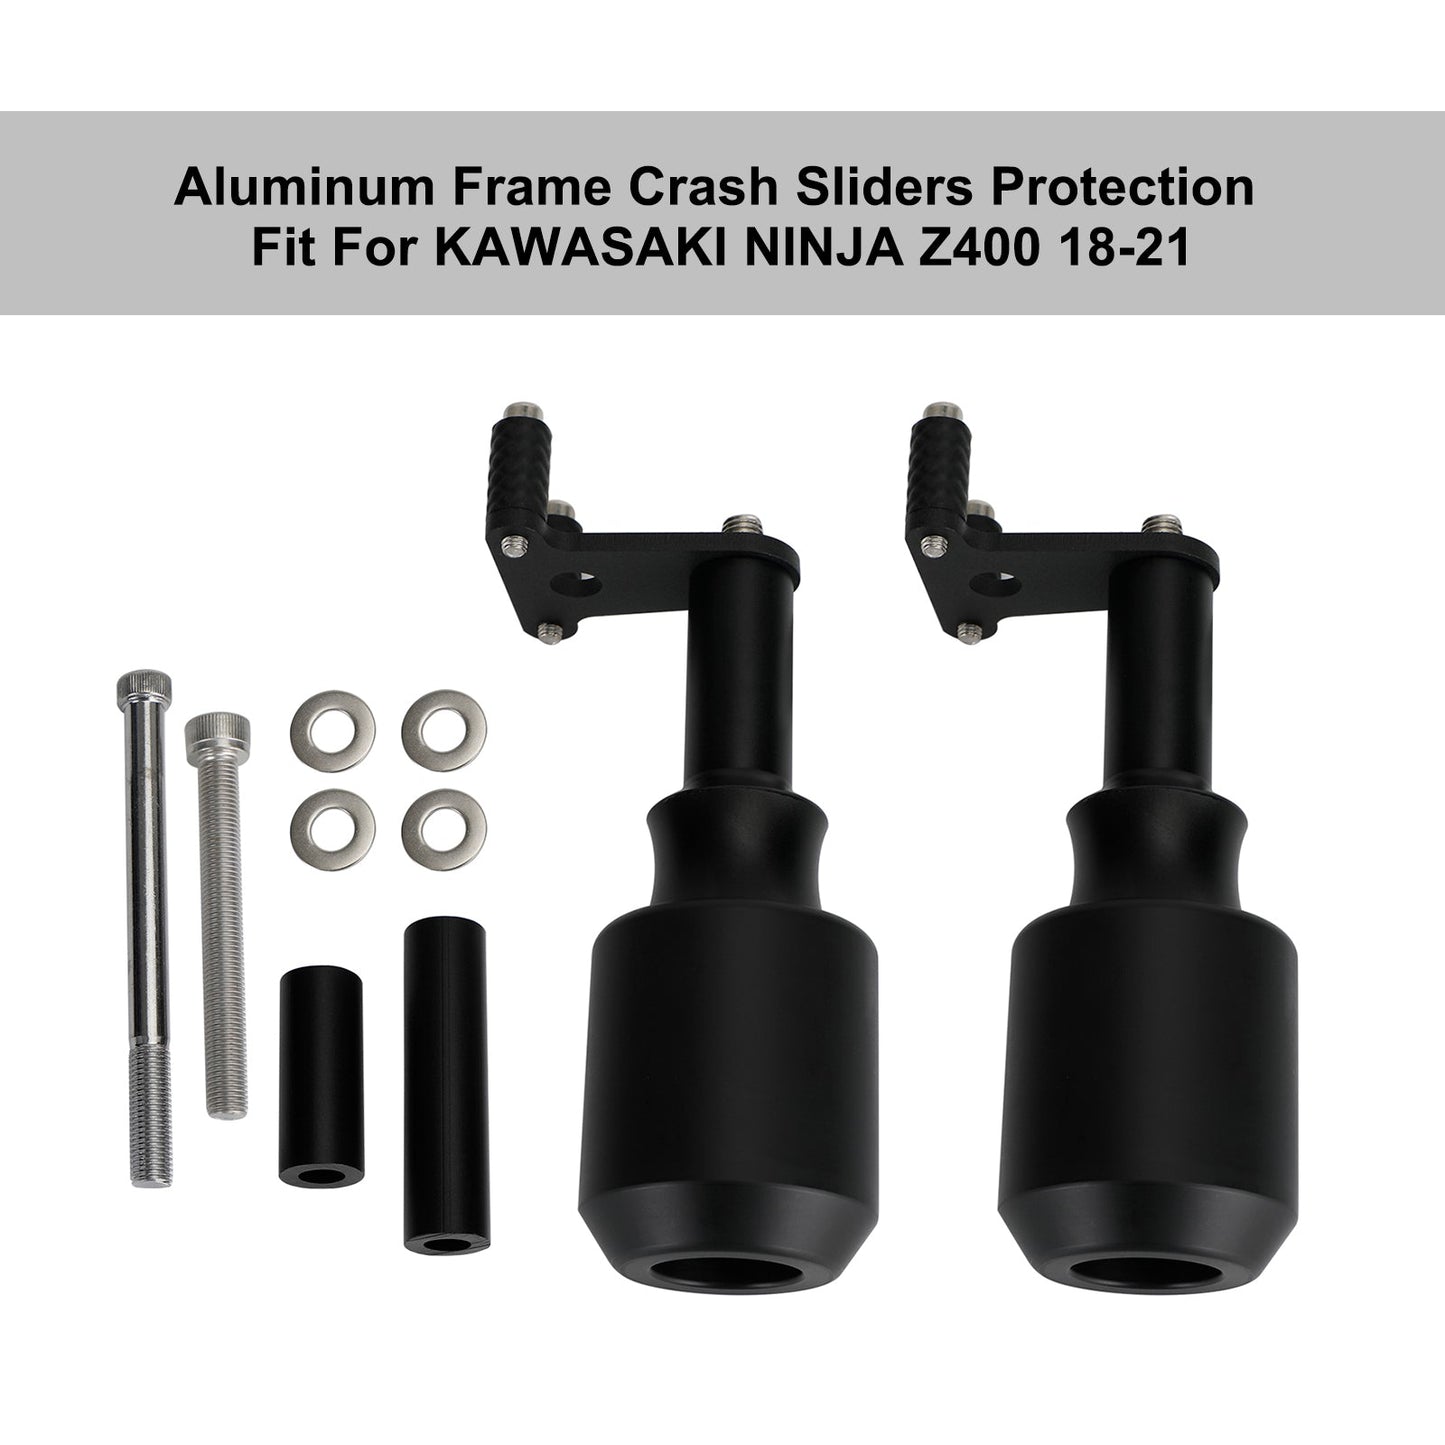 Aluminum Frame Crash Sliders Protection Black Fit For Kawasaki Ninja Z400 18-21